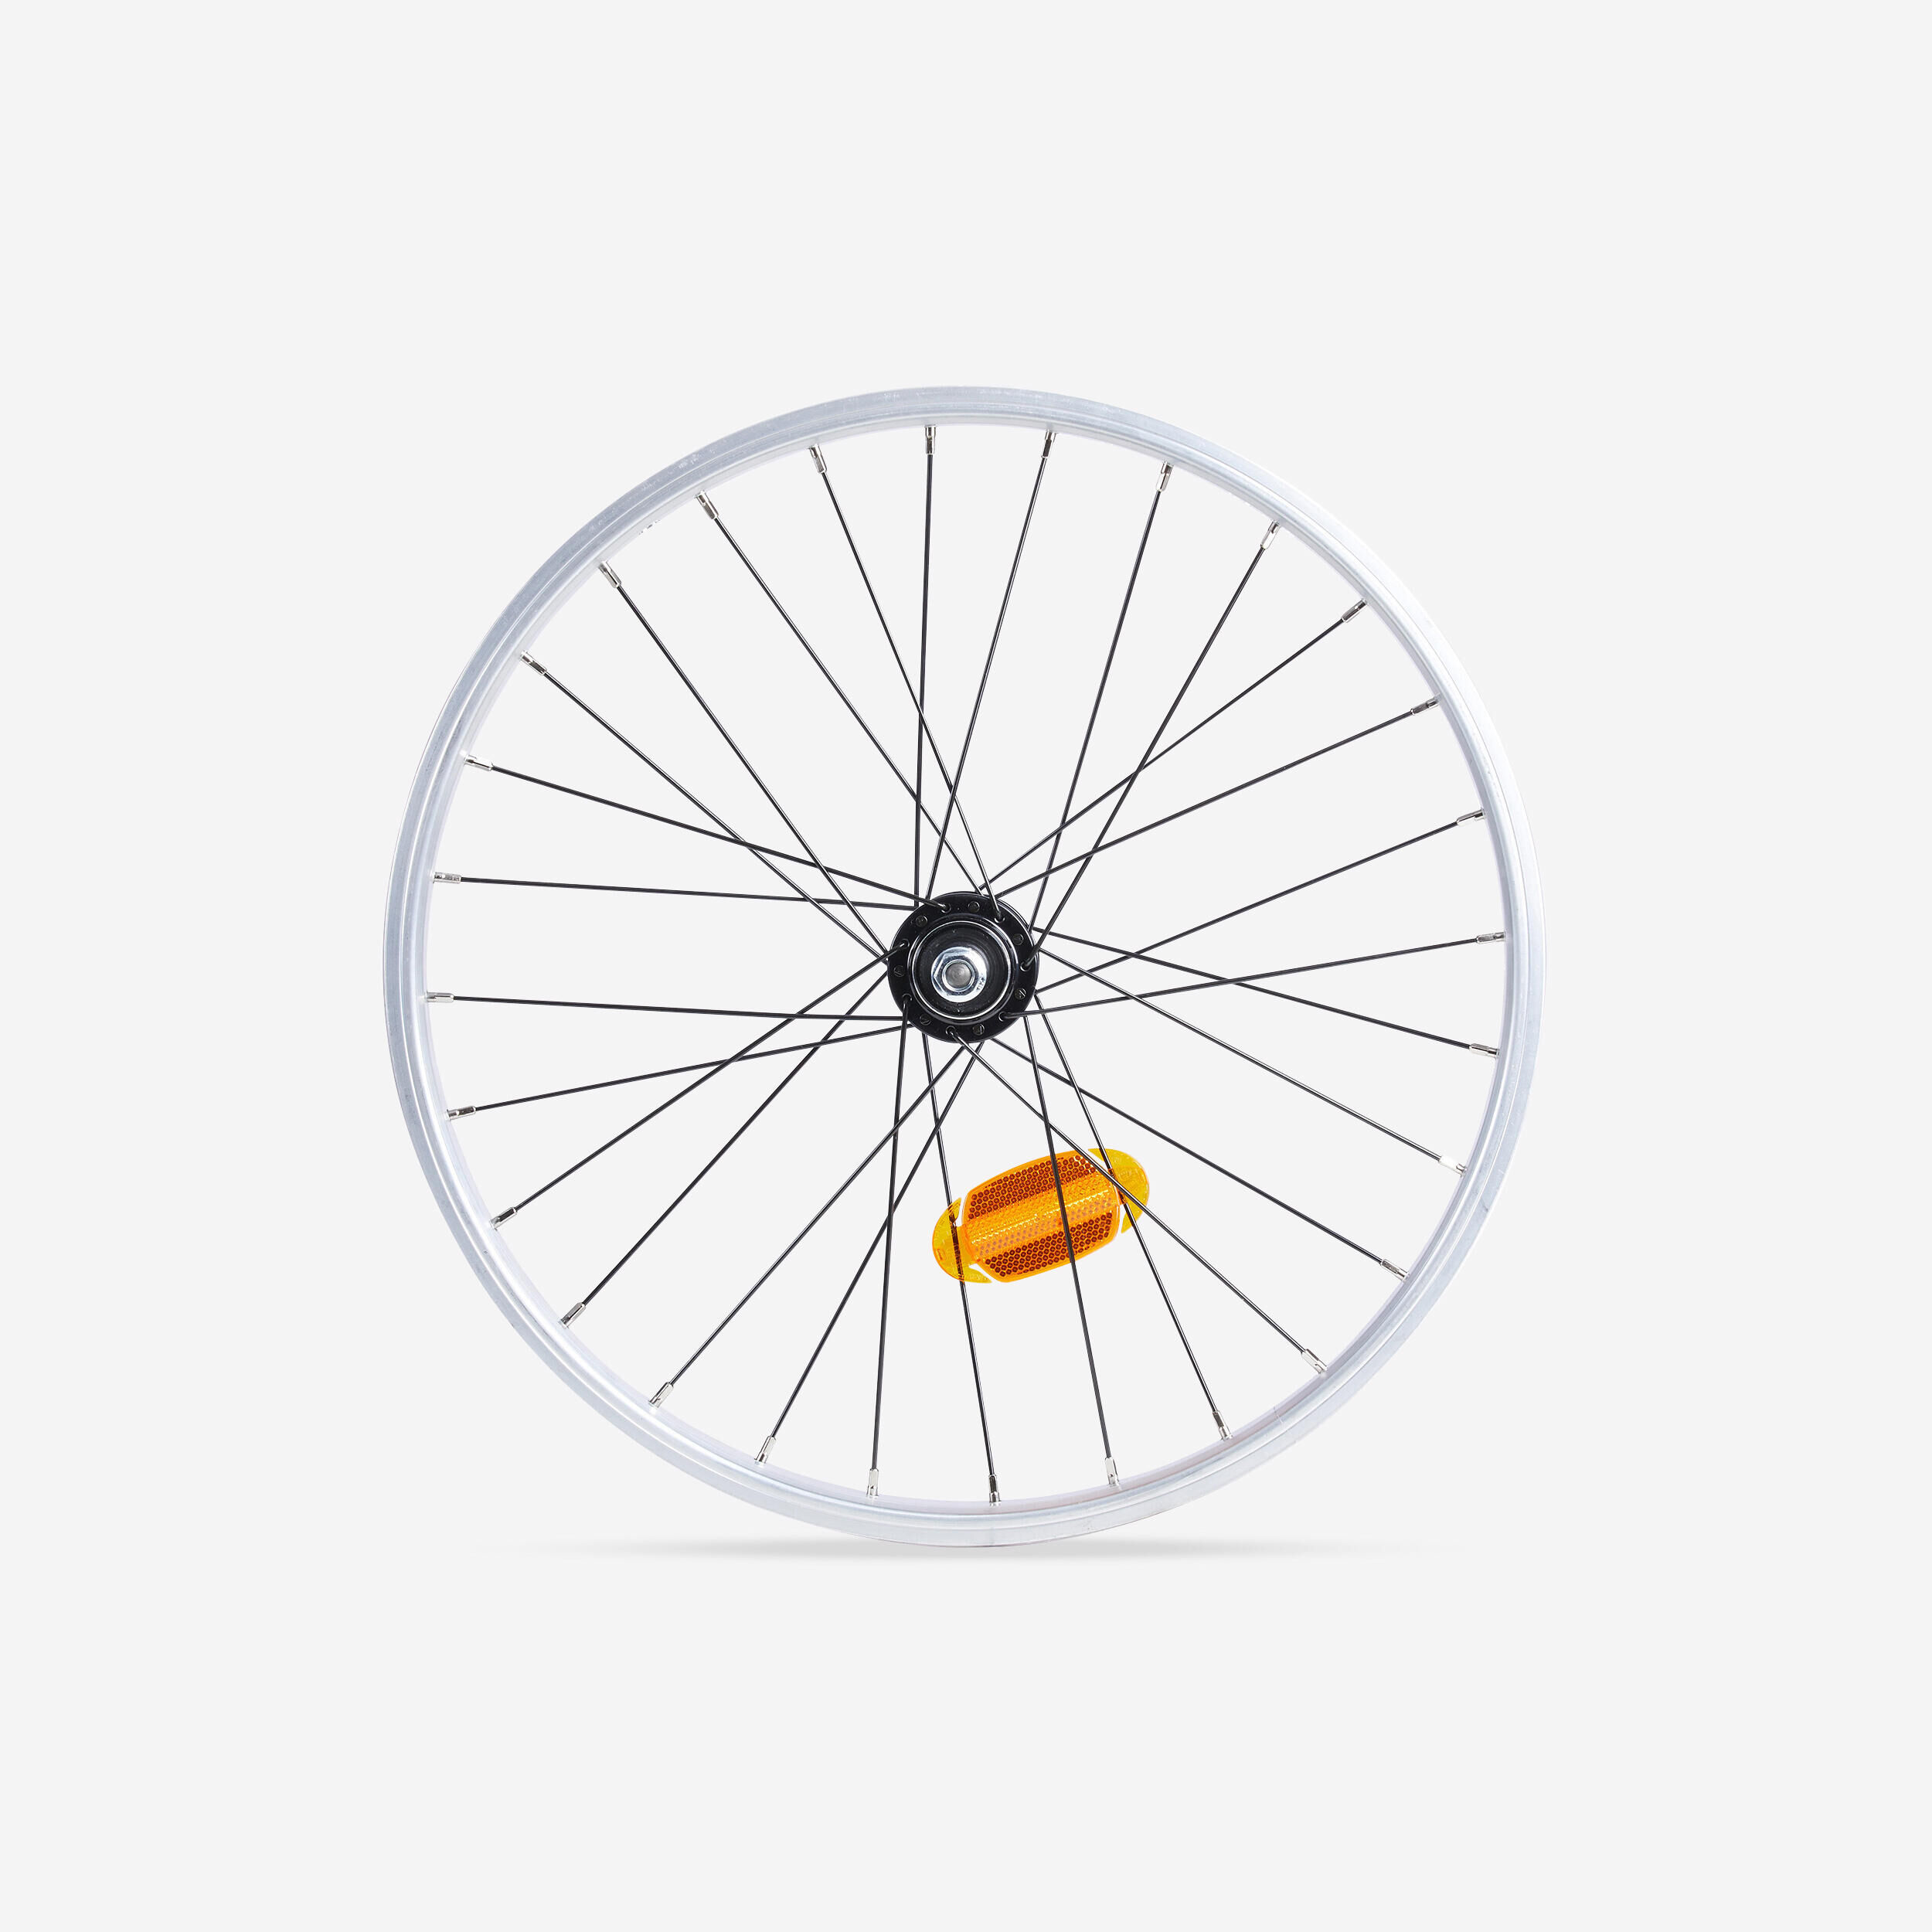 OXYLANE 20-inch single-walled replacement back folding bike wheel